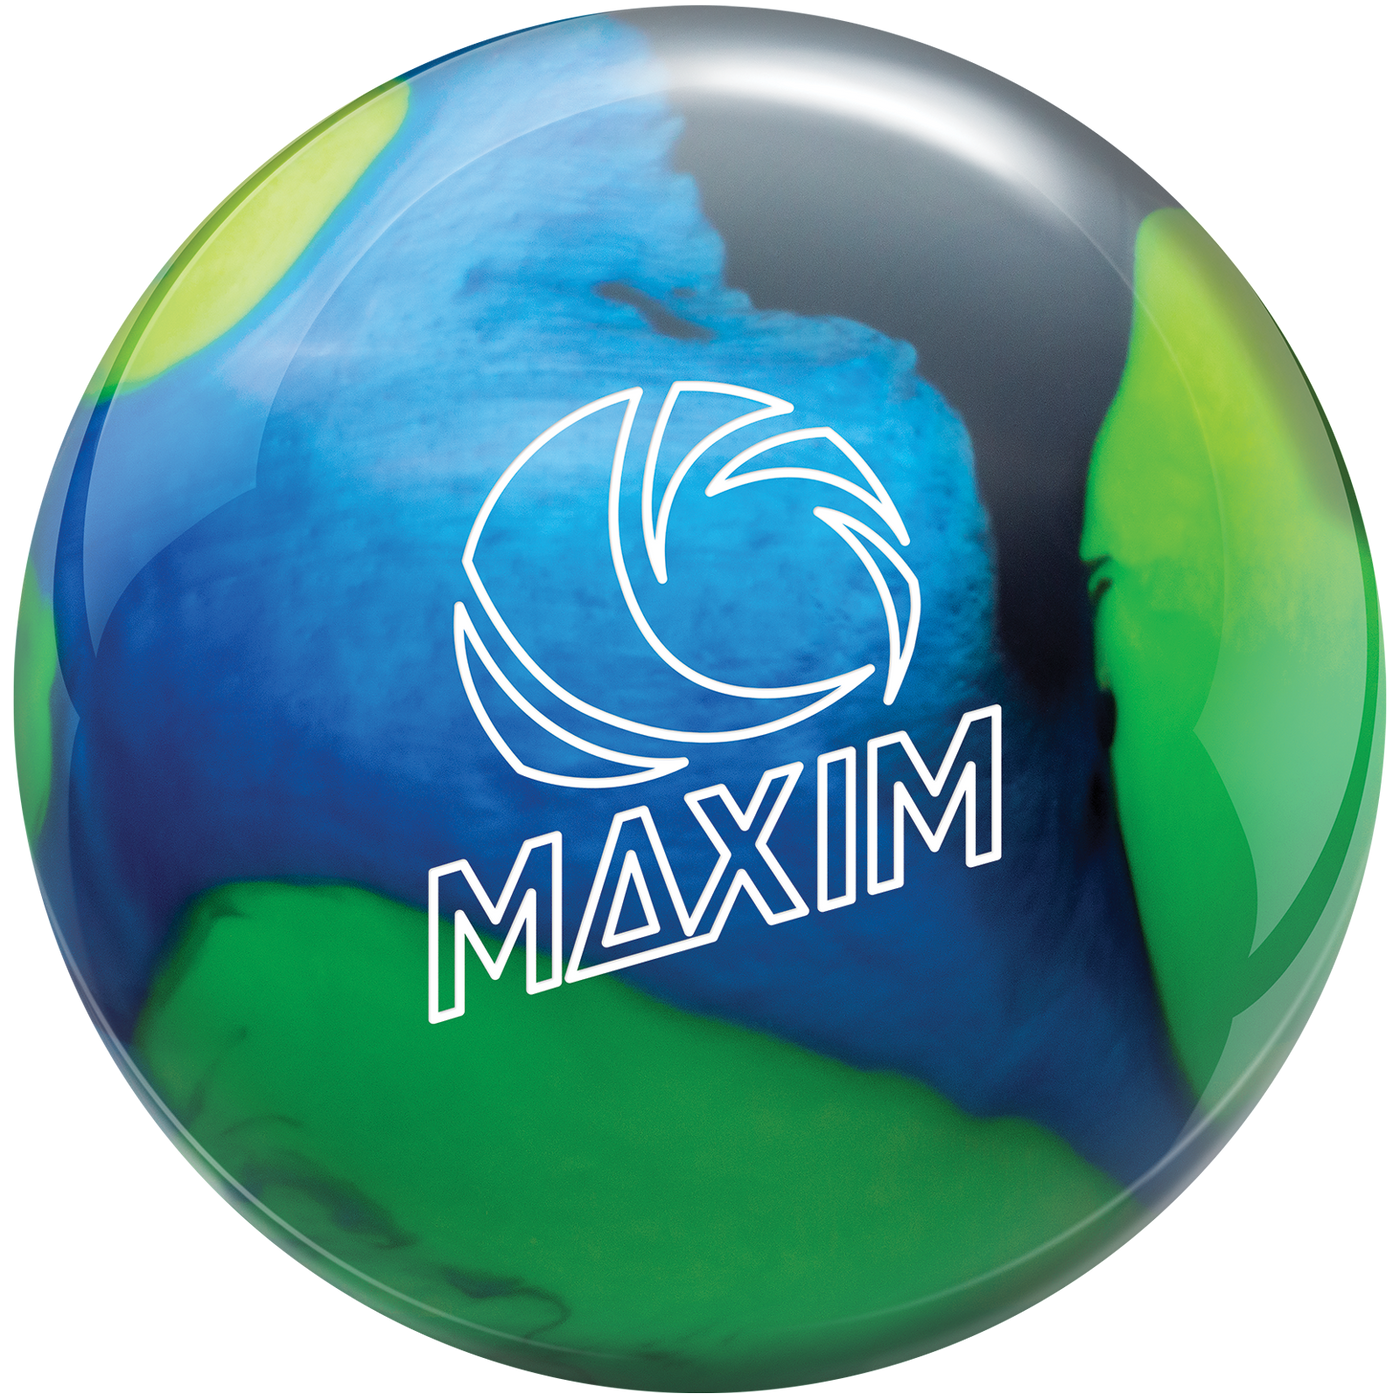 Maxim - Northern Lights bowling ball